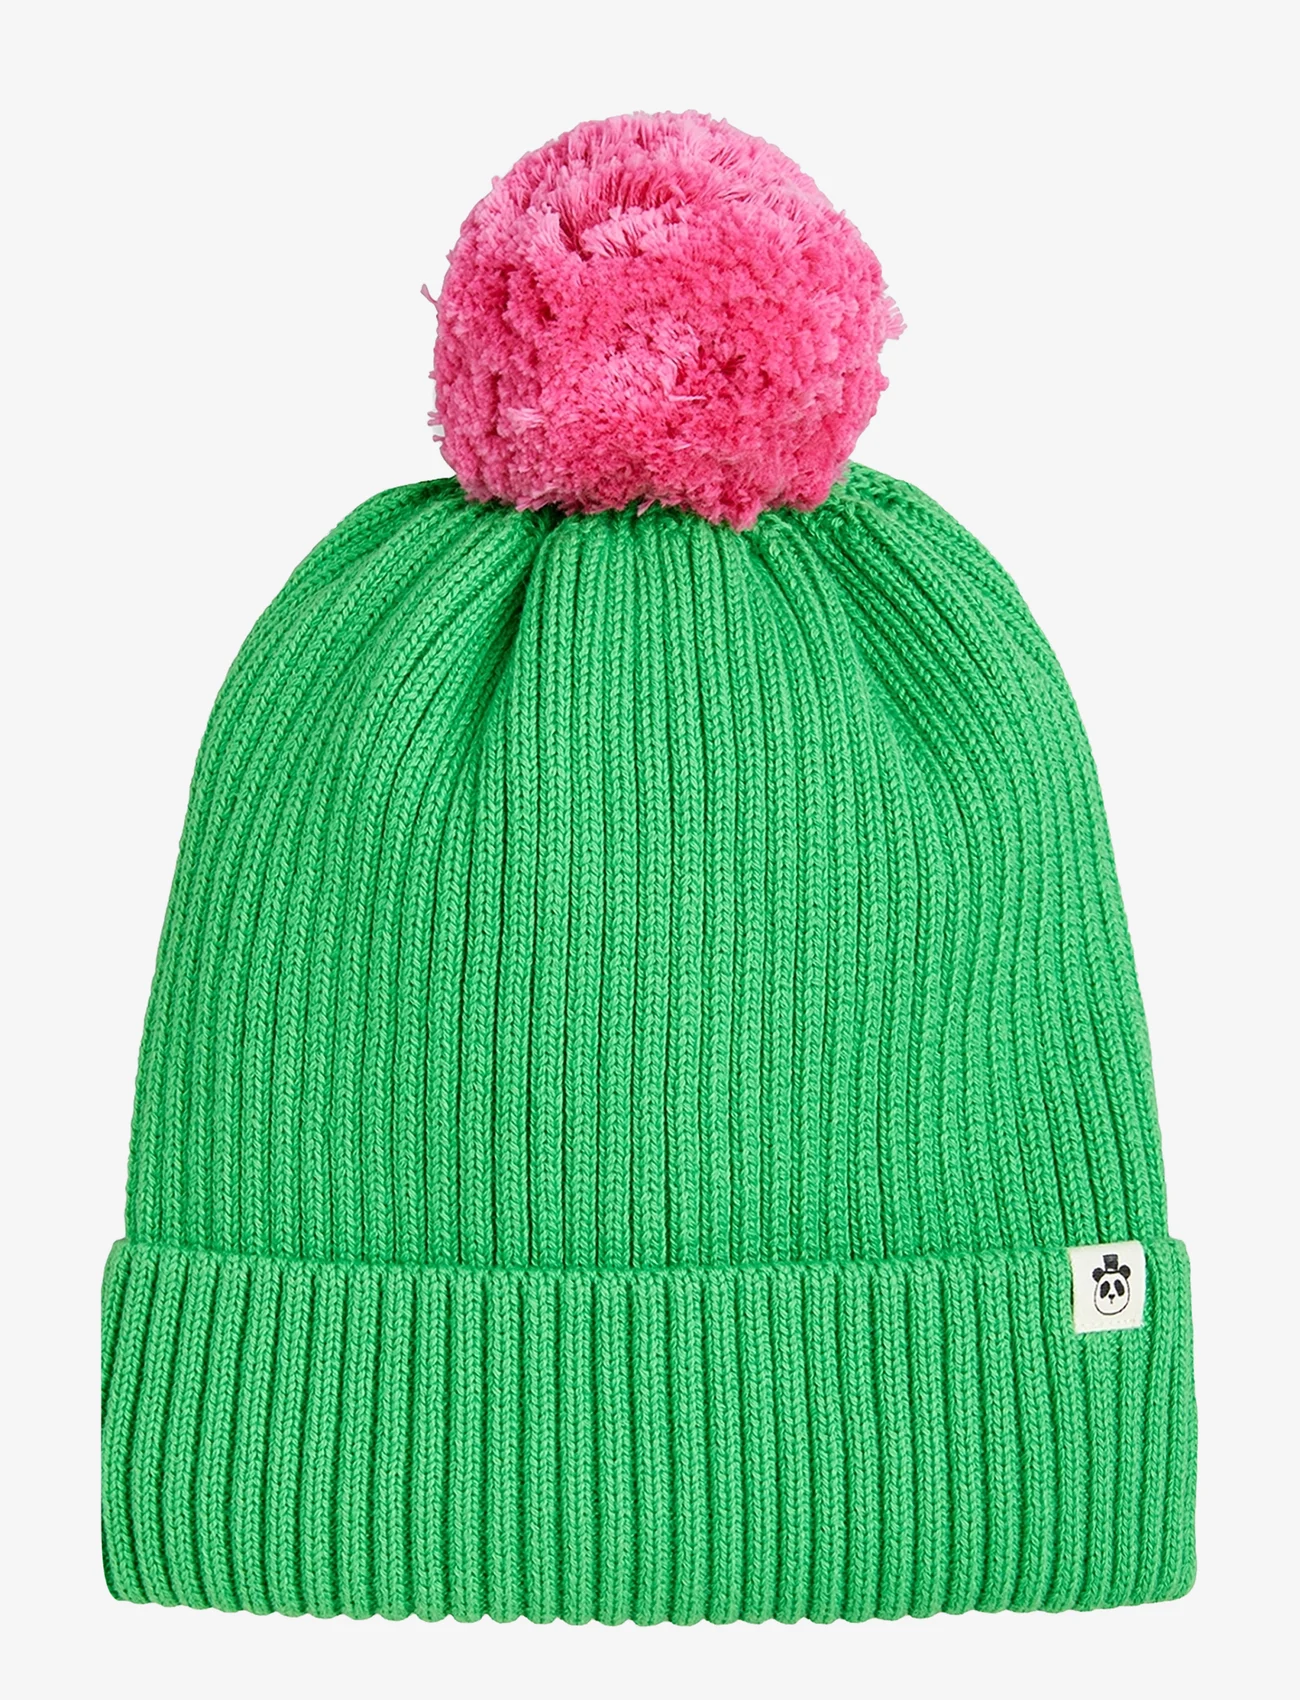 Mini Rodini - Pompom knitted hat - winter hats - green - 0